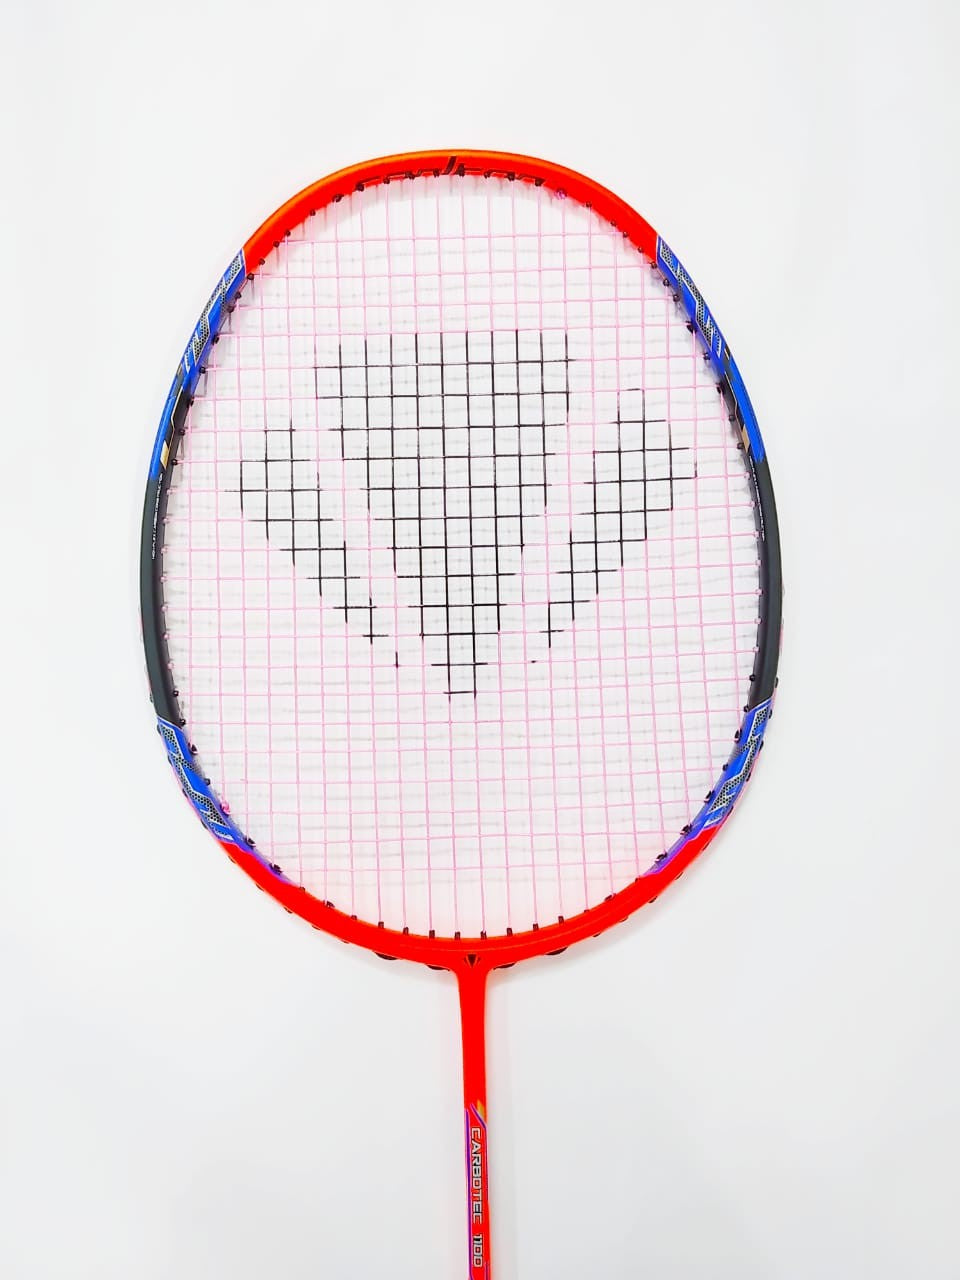 Carlton Carbotec 1100 Strung Badminton Racket